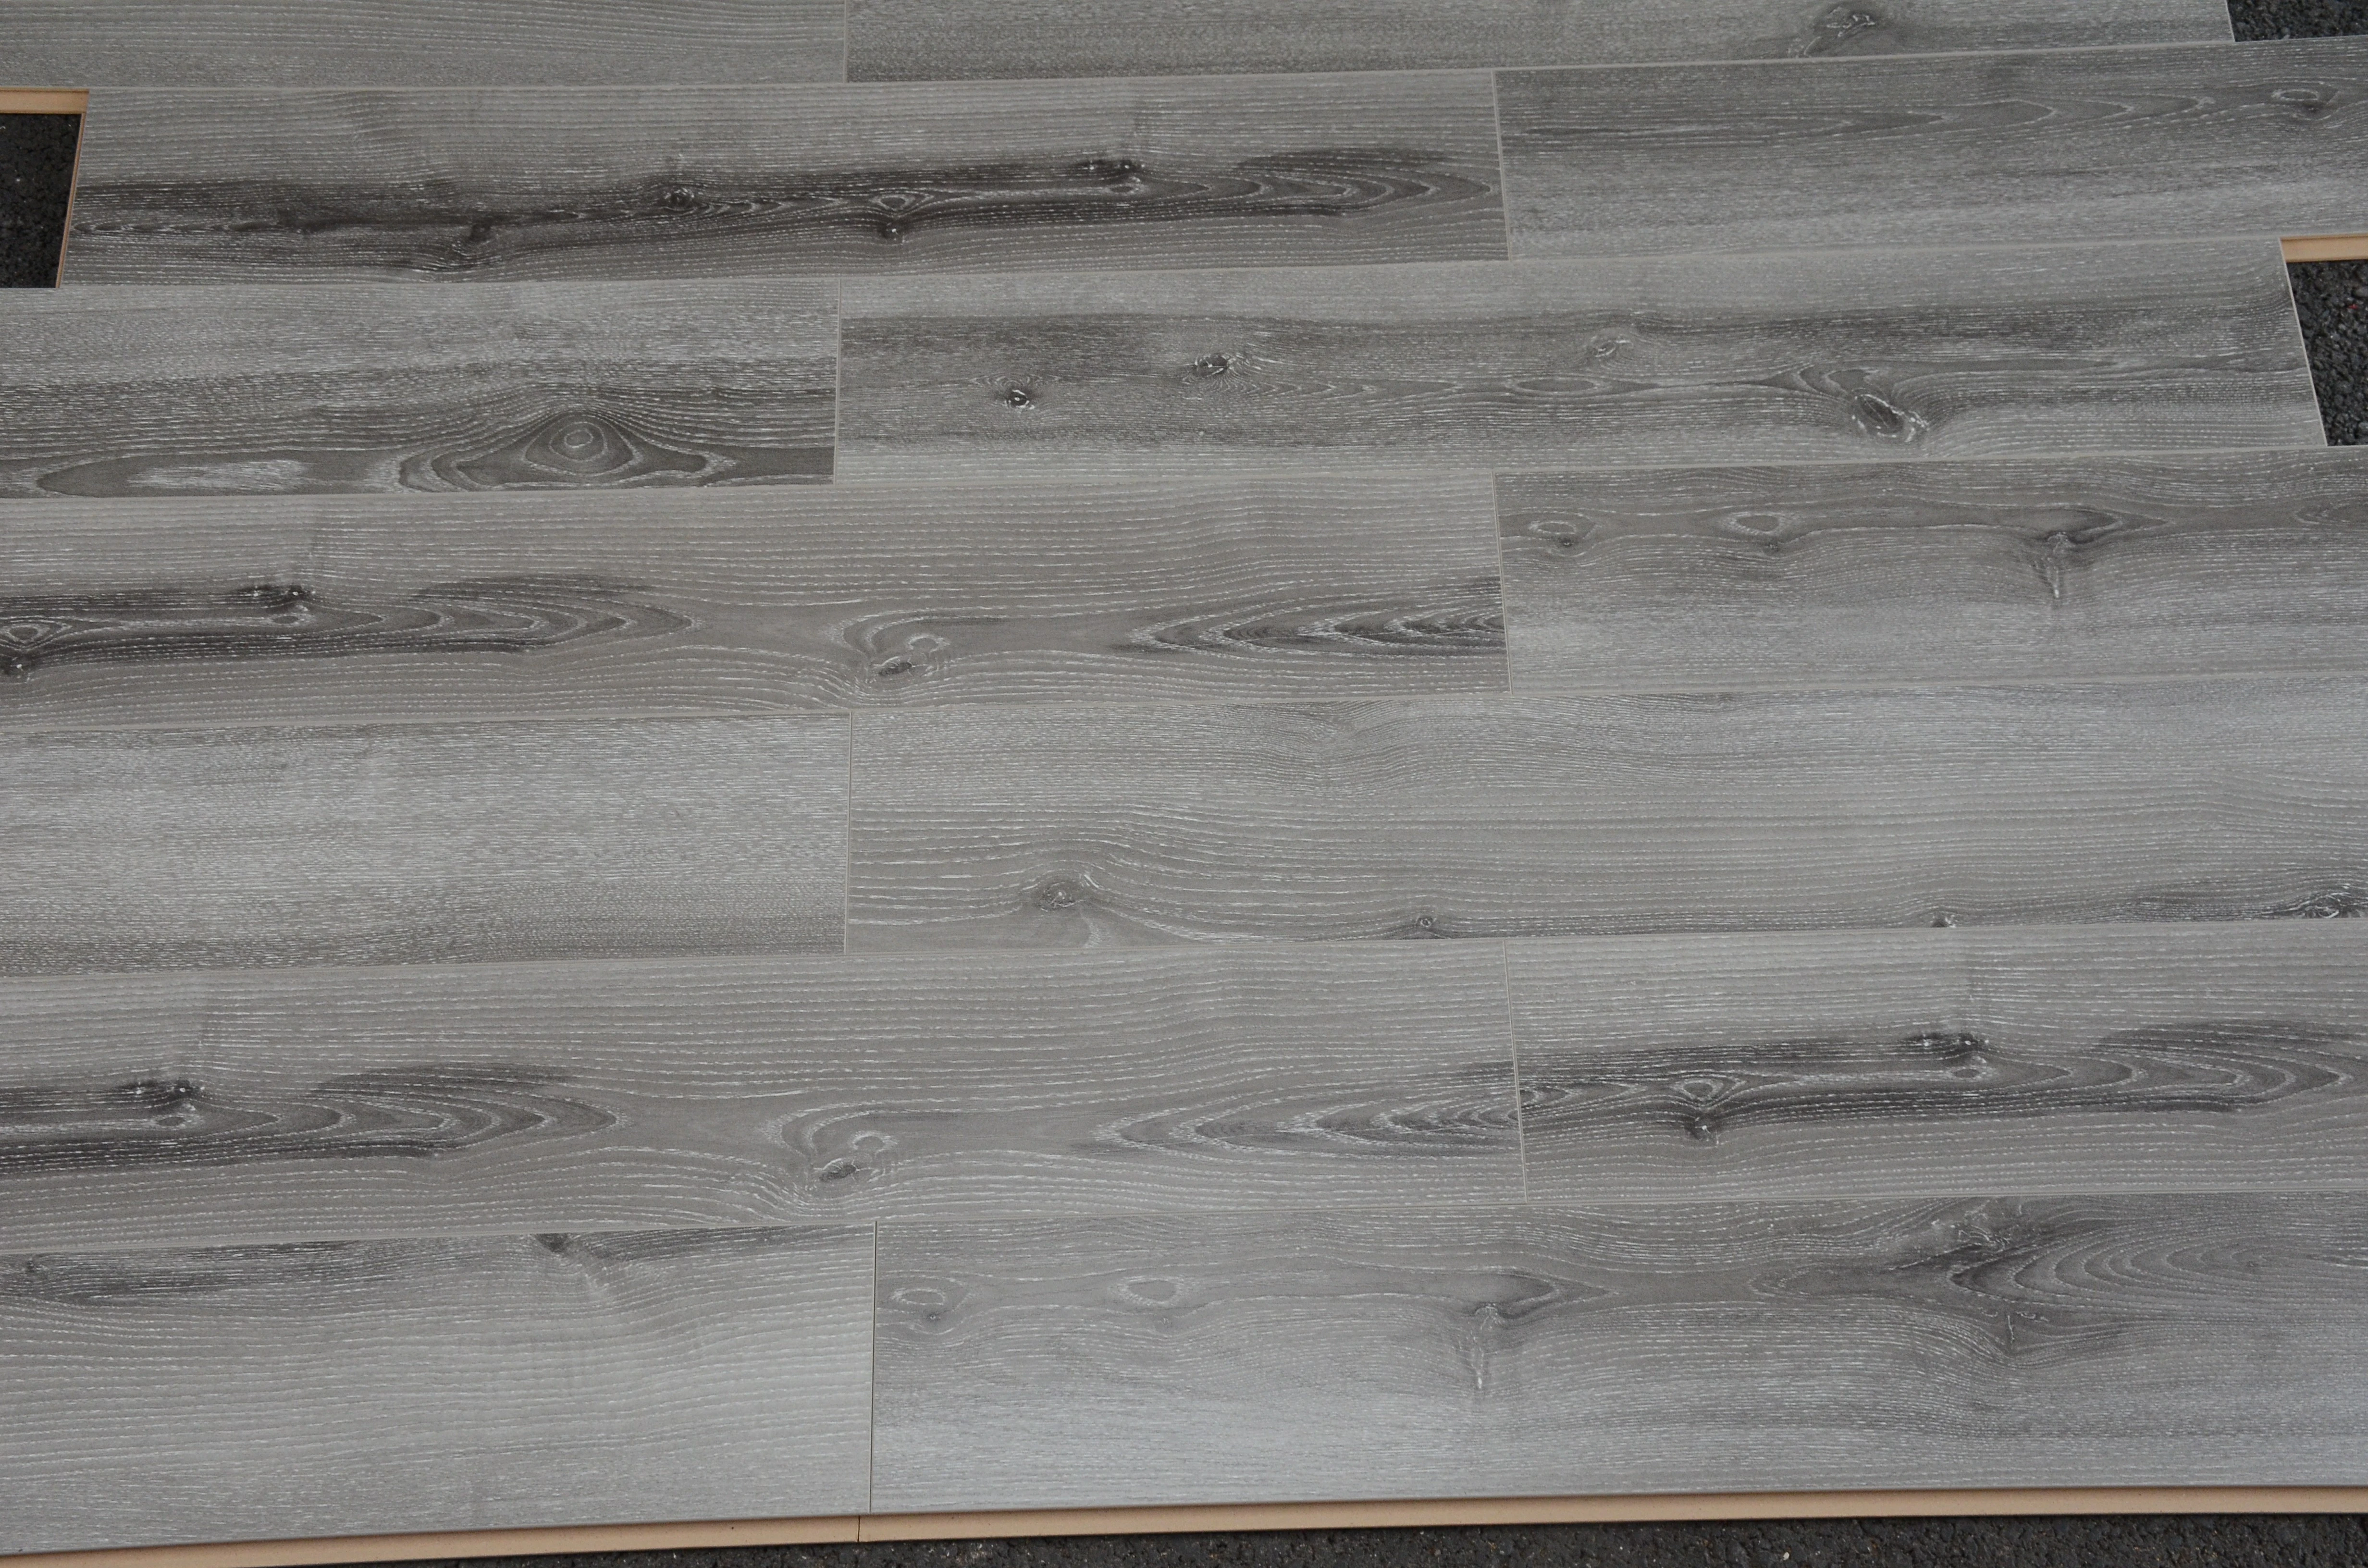 European style gray wood floors  parquet  waterproof 12mm indoor interior laminated solid wooden flooring